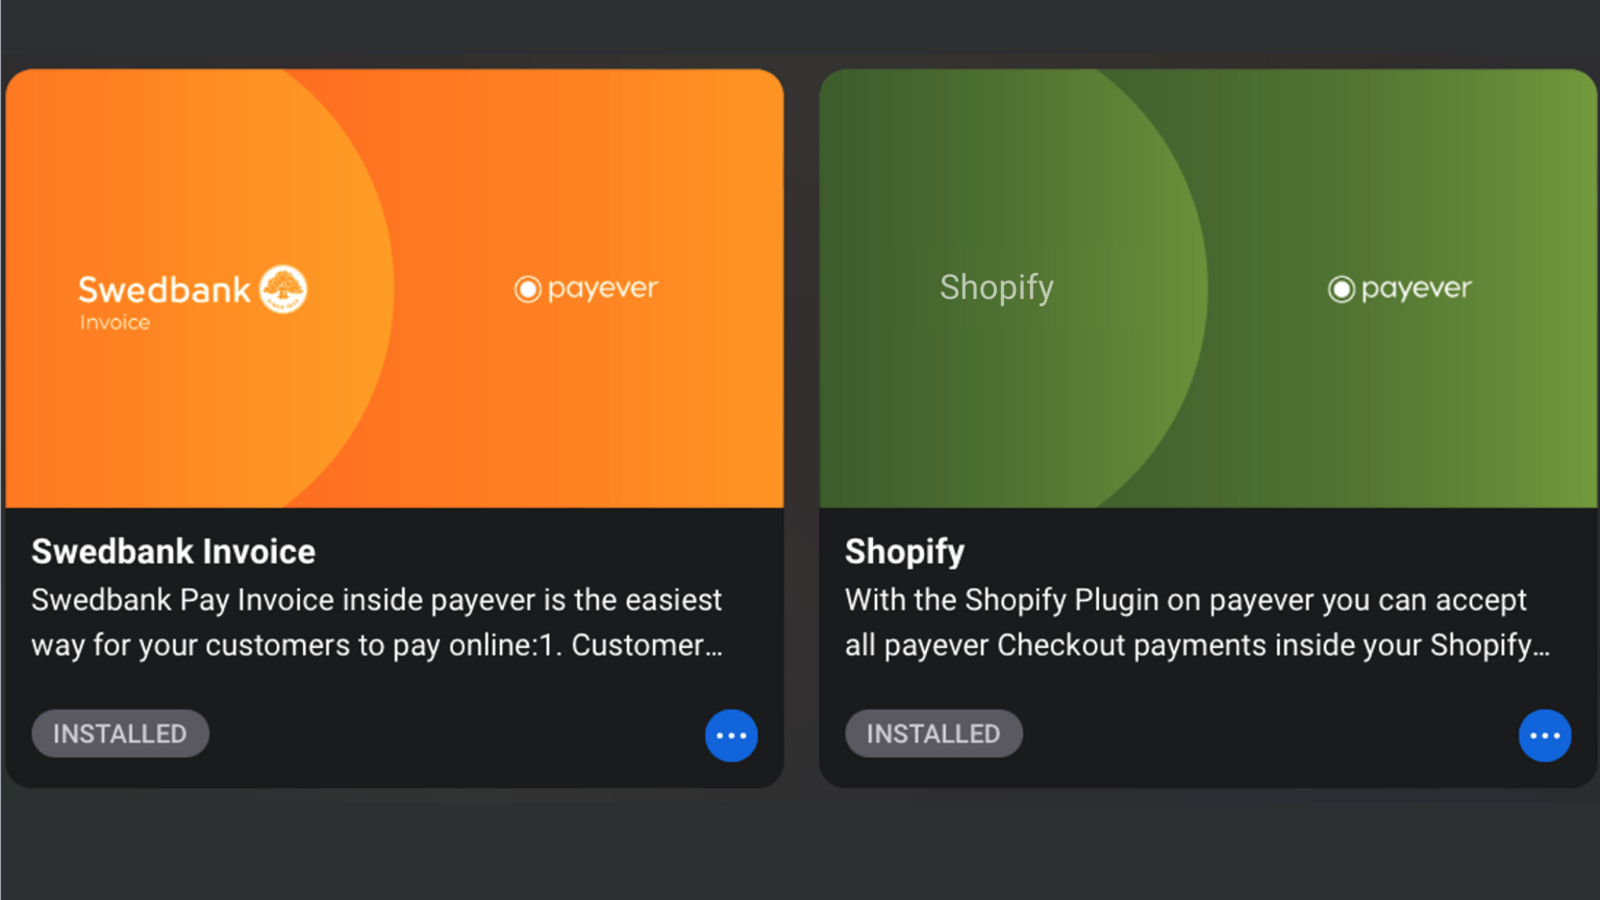 Swedbank en Shopify App in payever